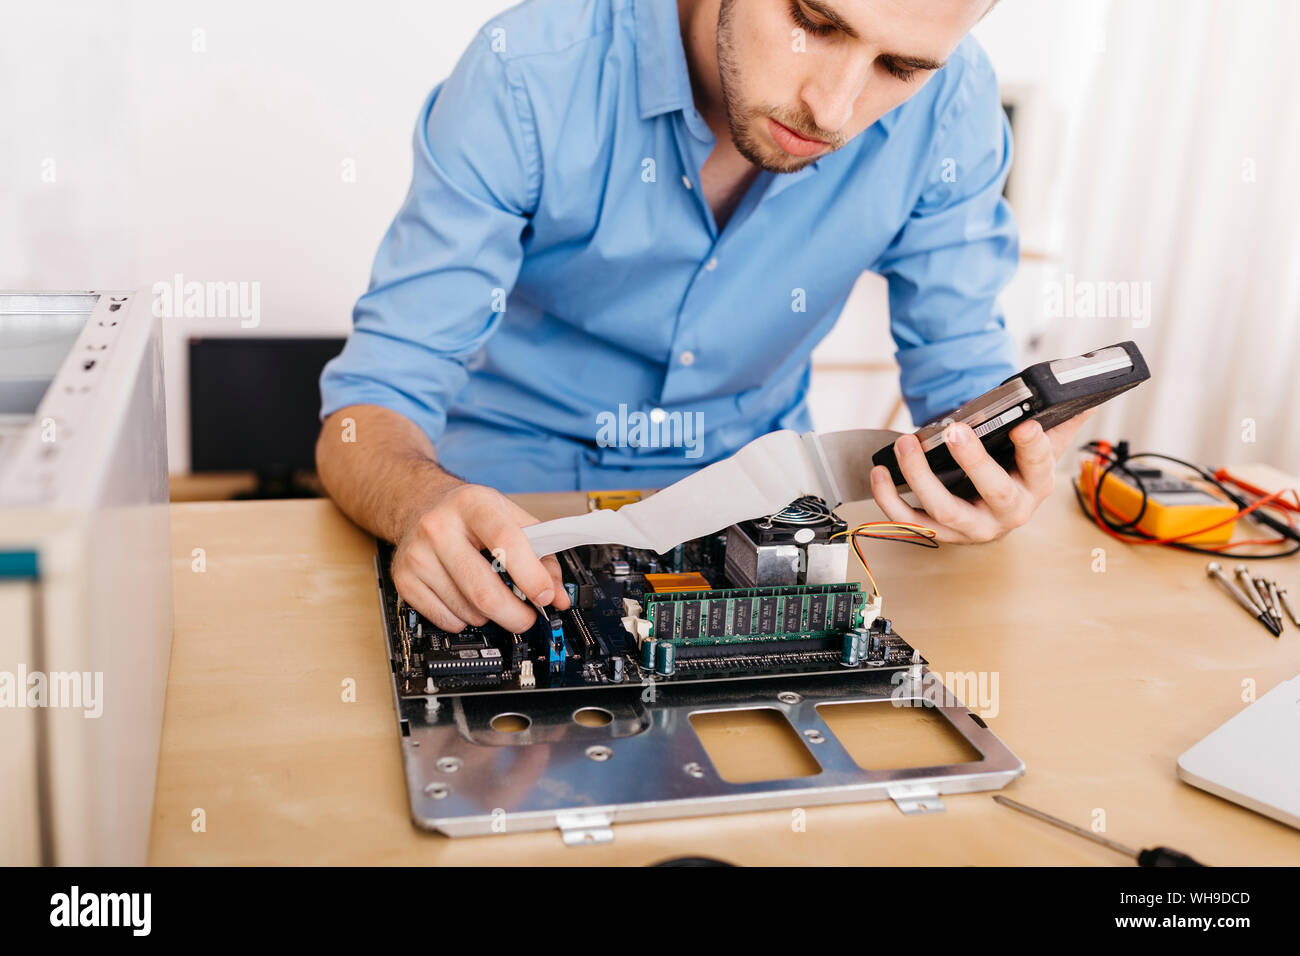 Technician repairing a desktop computer Stock Photo